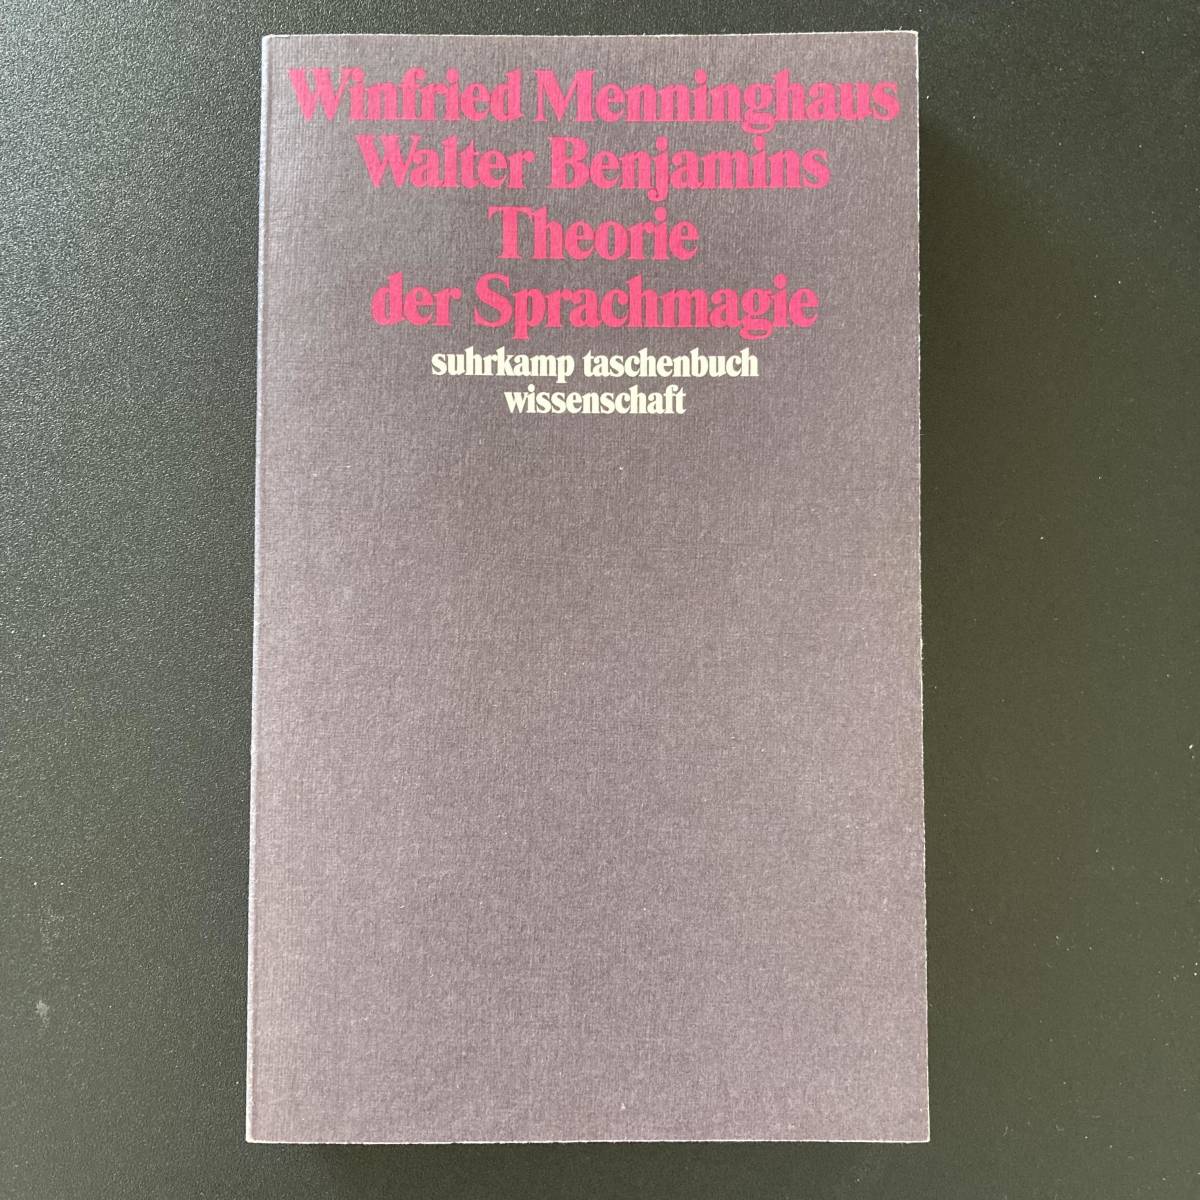 Walter Benjamins Theorie der Sprachmagie / Winfried Menninghaus (著) [ ヴィンフリ−ト・メニングハウス ; ベンヤミン ]_画像1